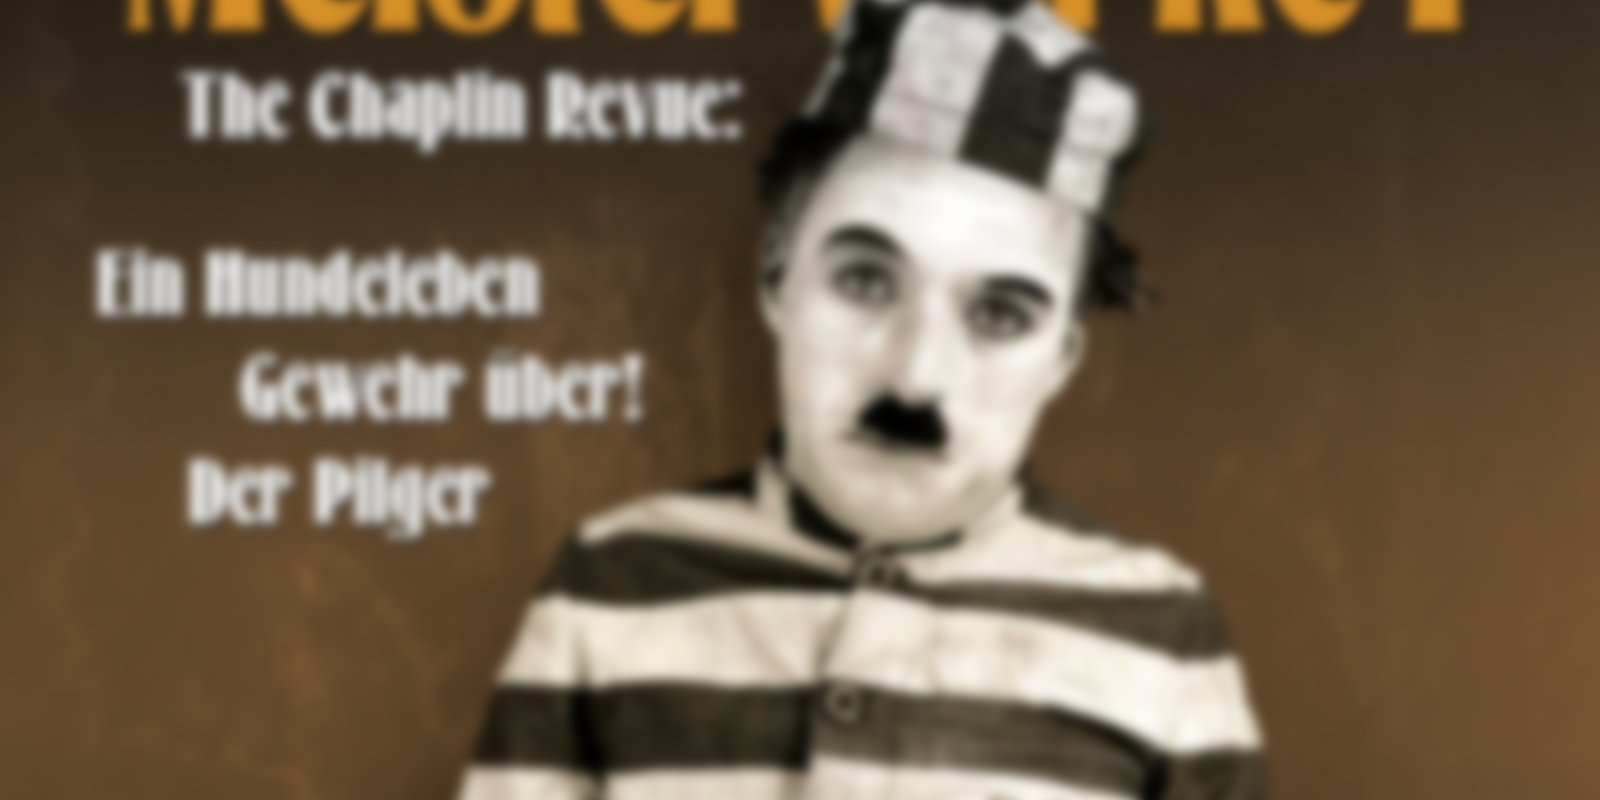 Charlie Chaplin - Frühe Meisterwerke 1